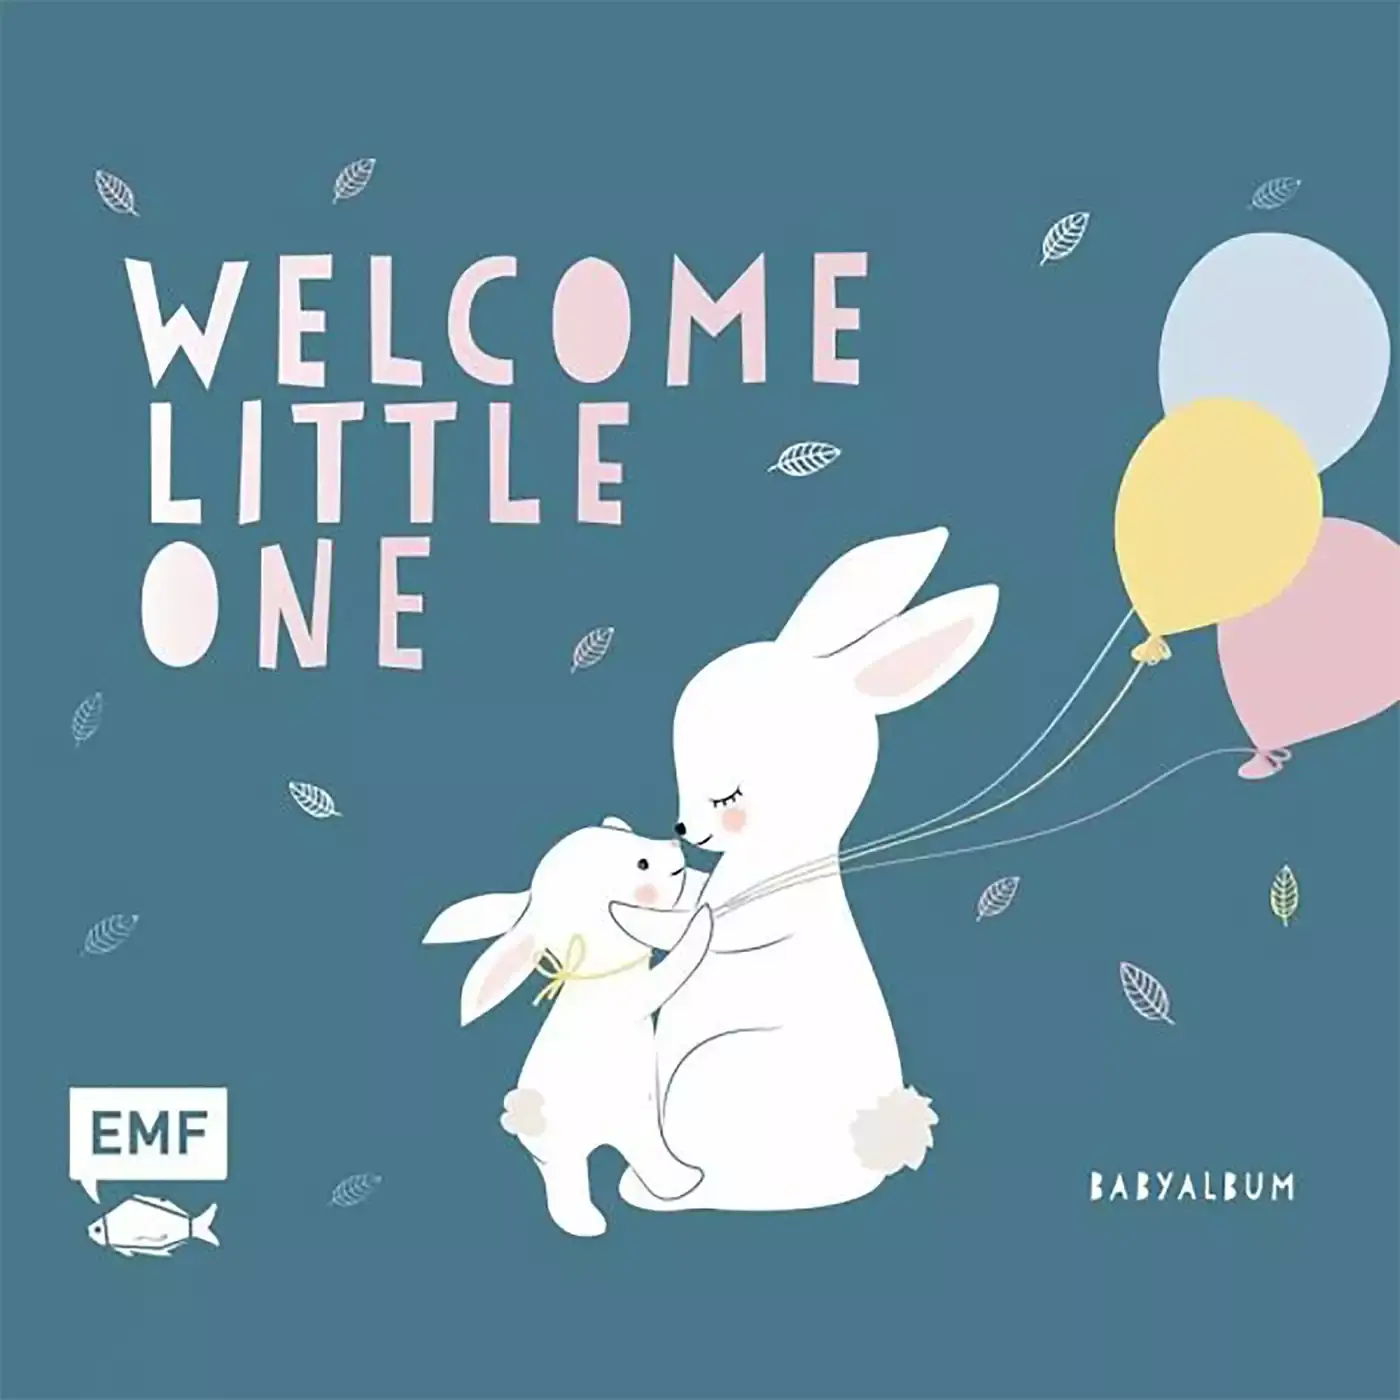 Babyalbum Welcome little one EMF Blau 2000577521401 3